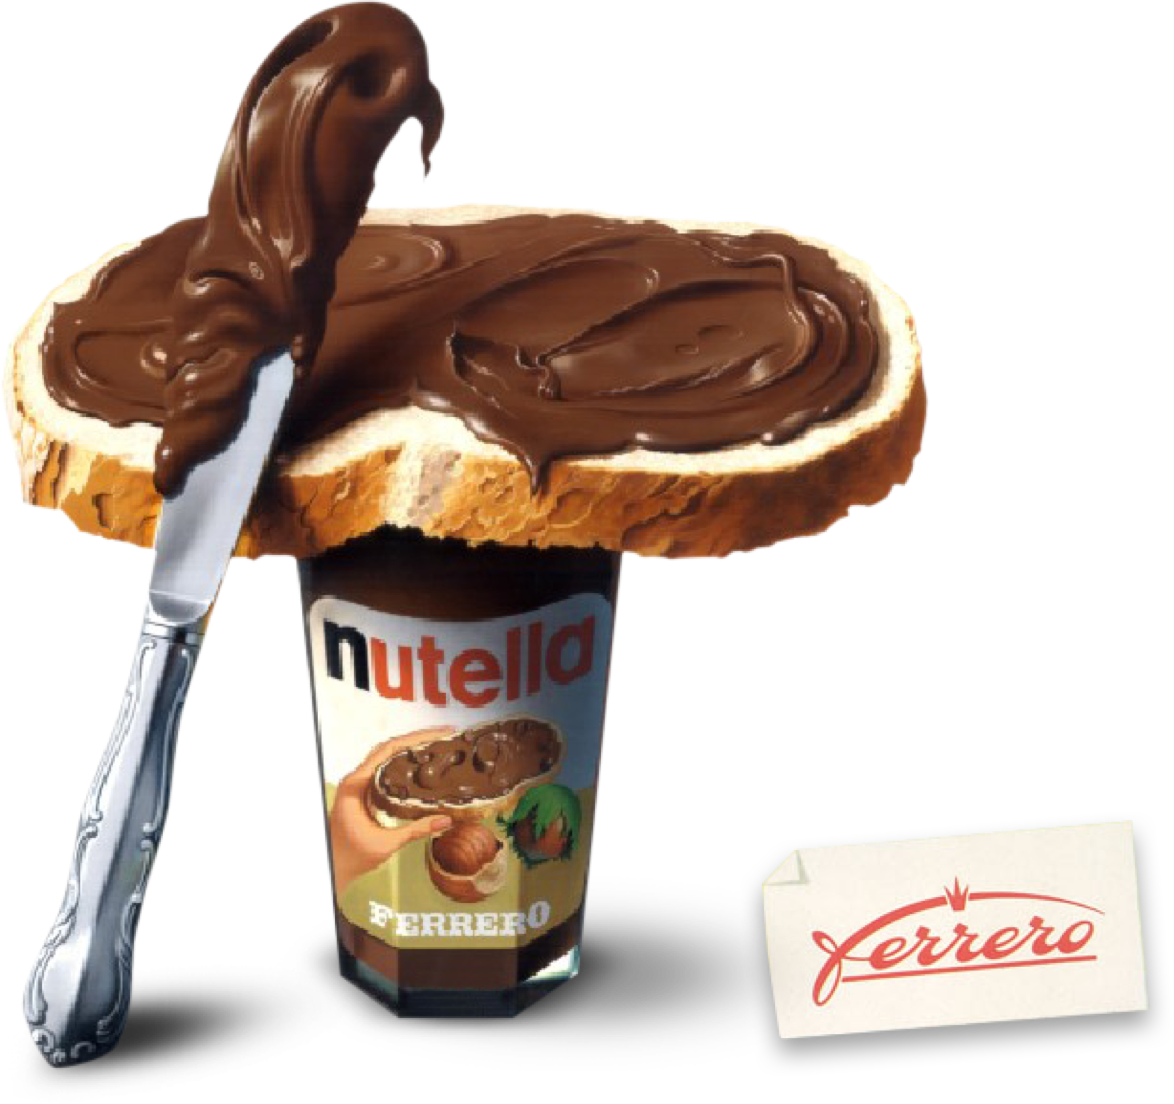 Quand Ferrero rembourse les pots de Nutella